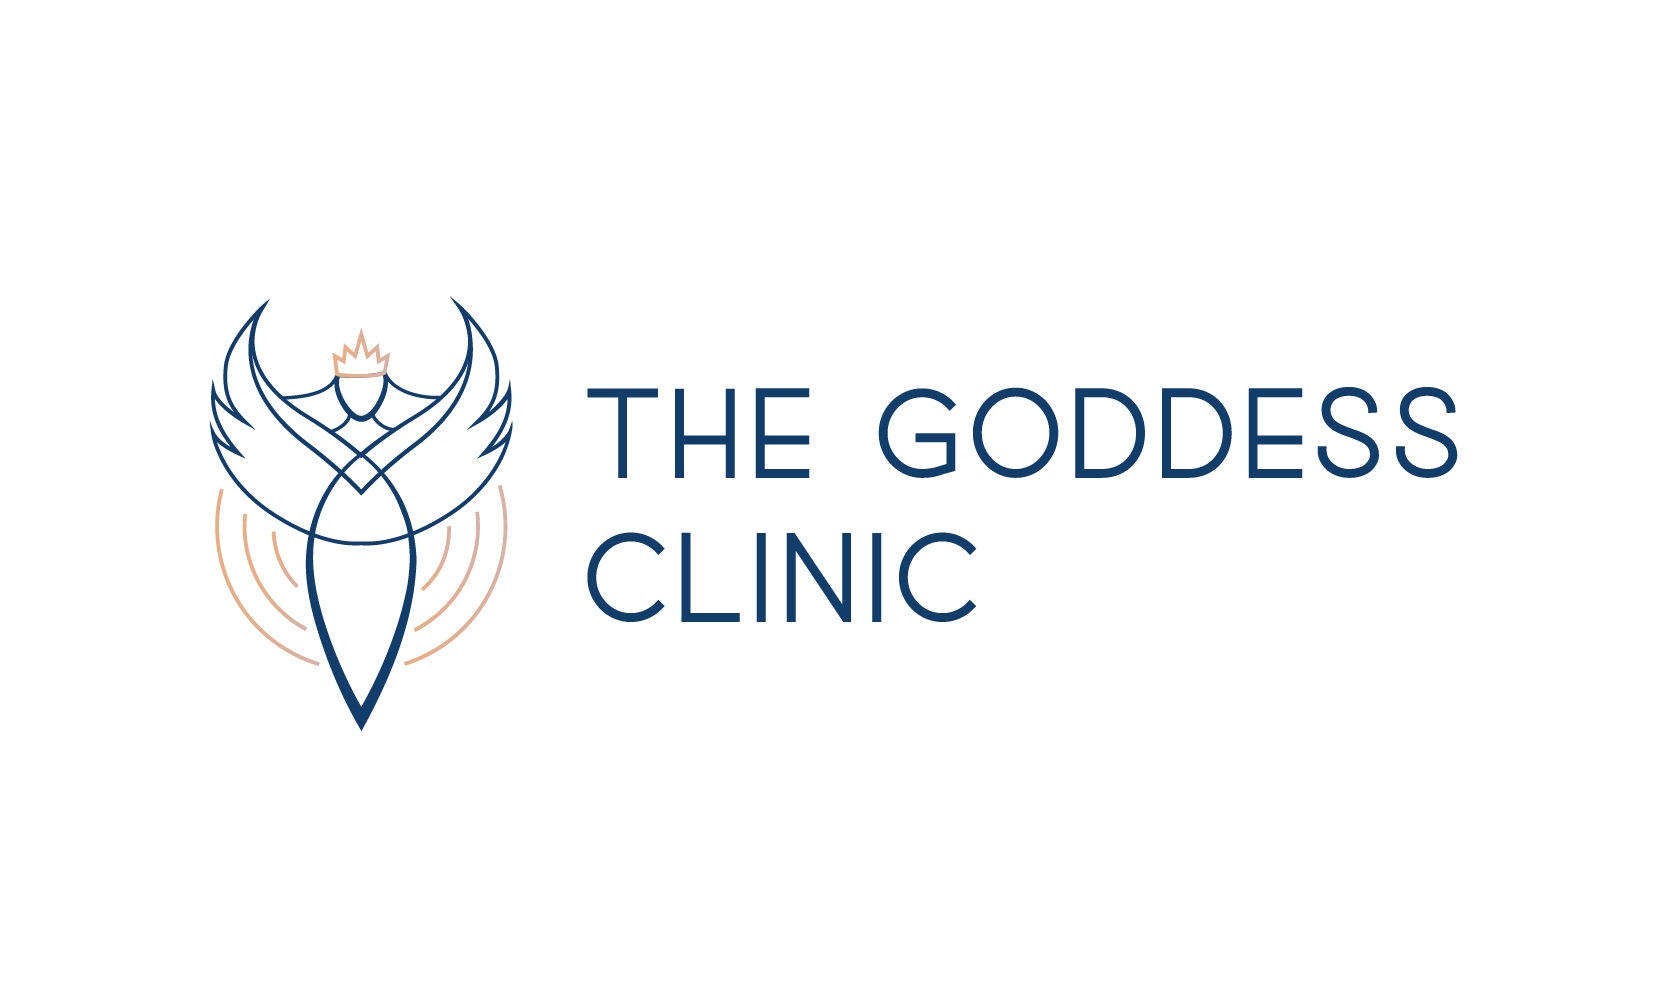 The Goddess Clinic